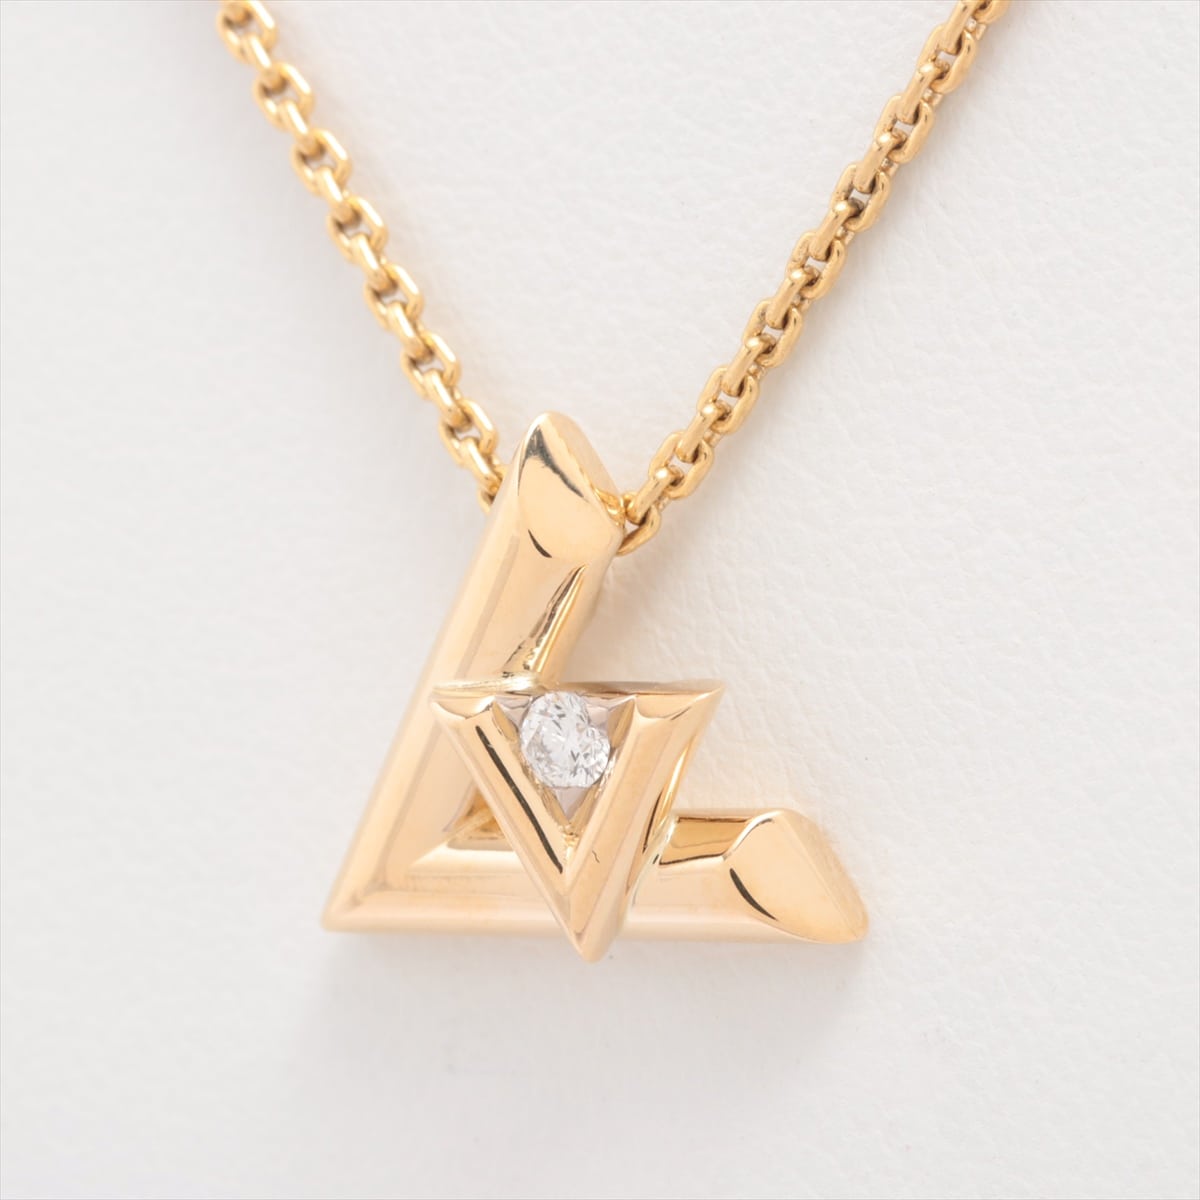 Louis Vuitton Pandantif LV Vault Wang PM diamond Necklace 750(YG) 5.9g